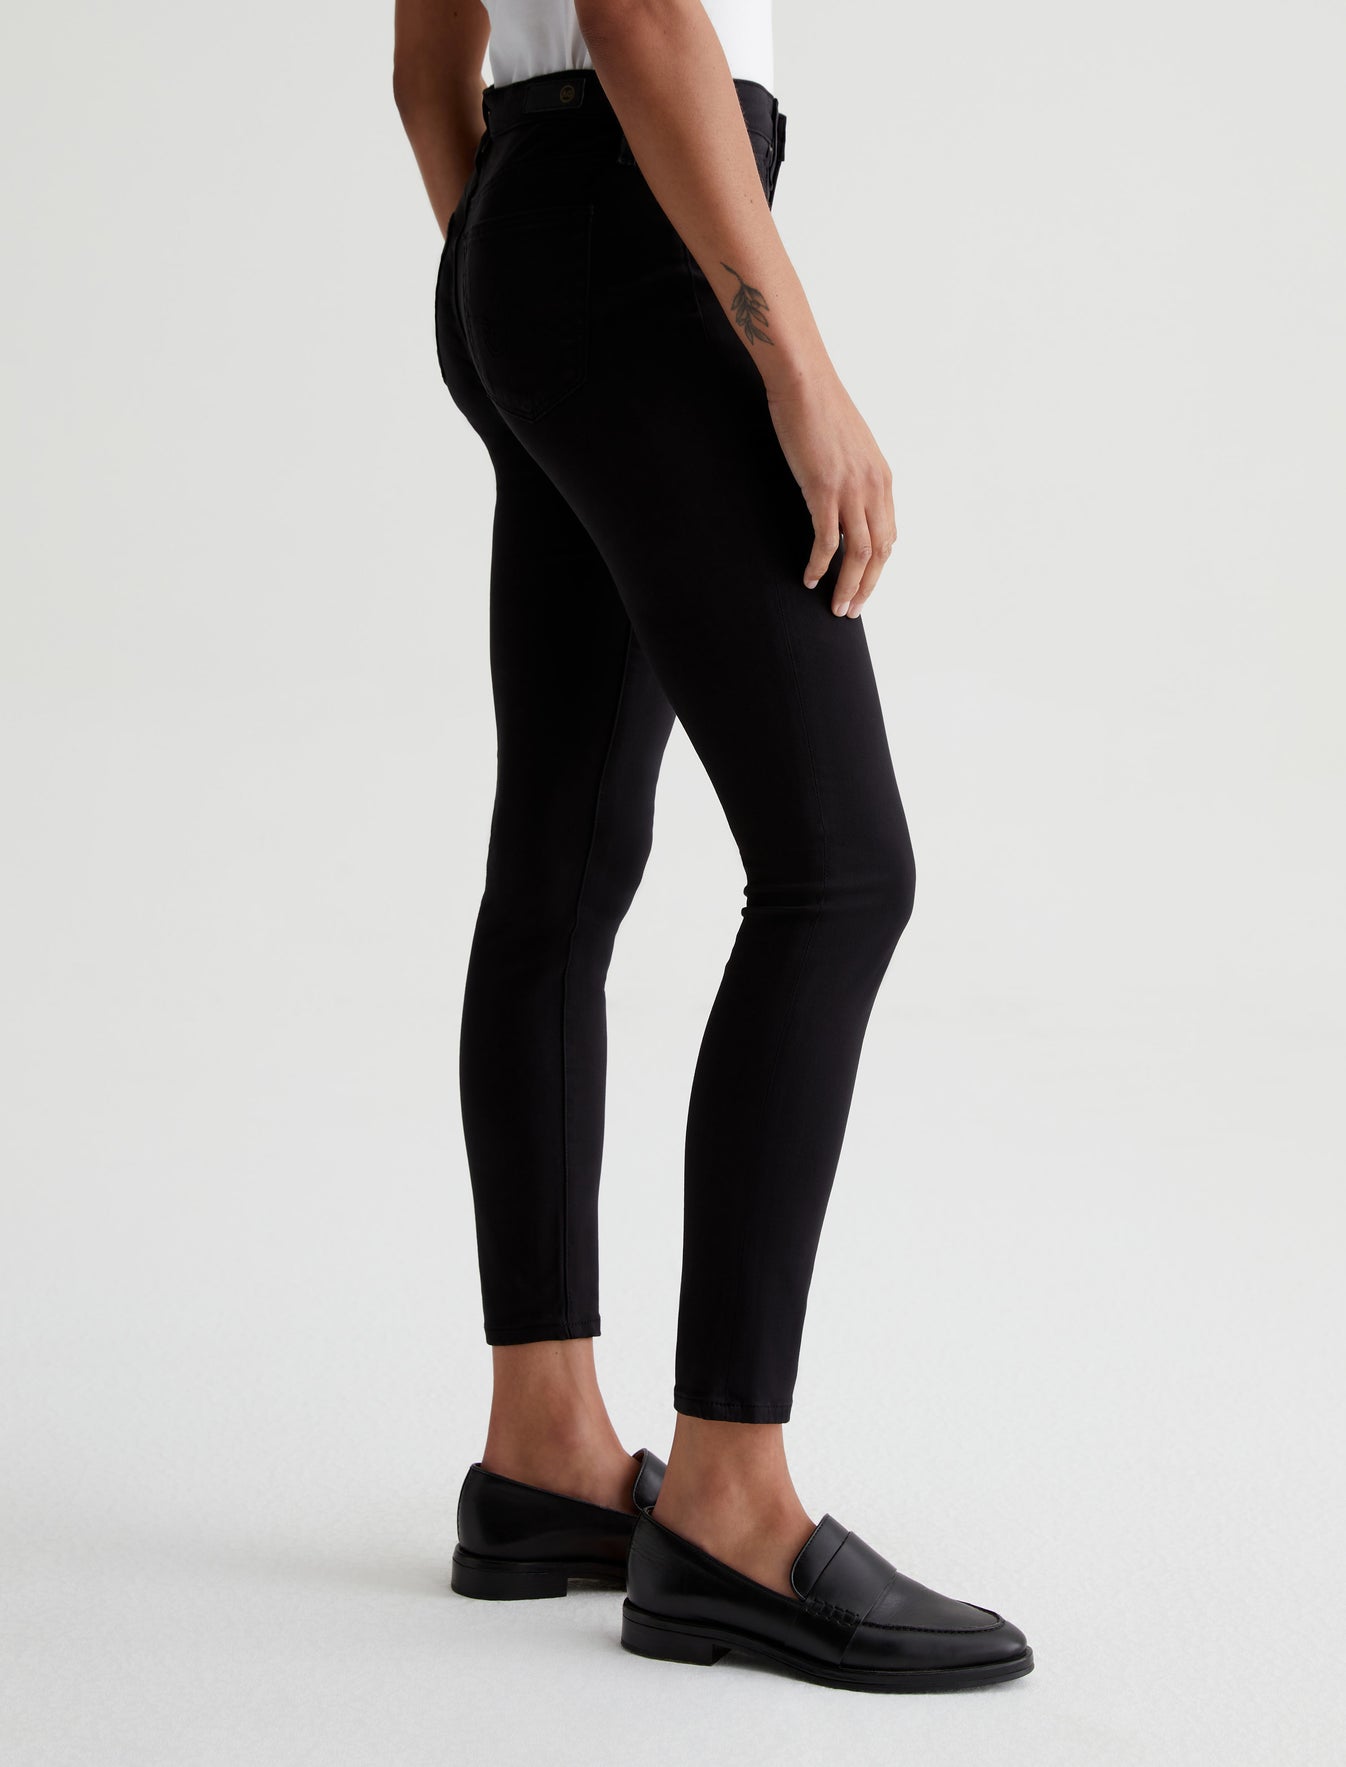 Buy Black Cropped Denim Jersey Leggings from Next Slovakia